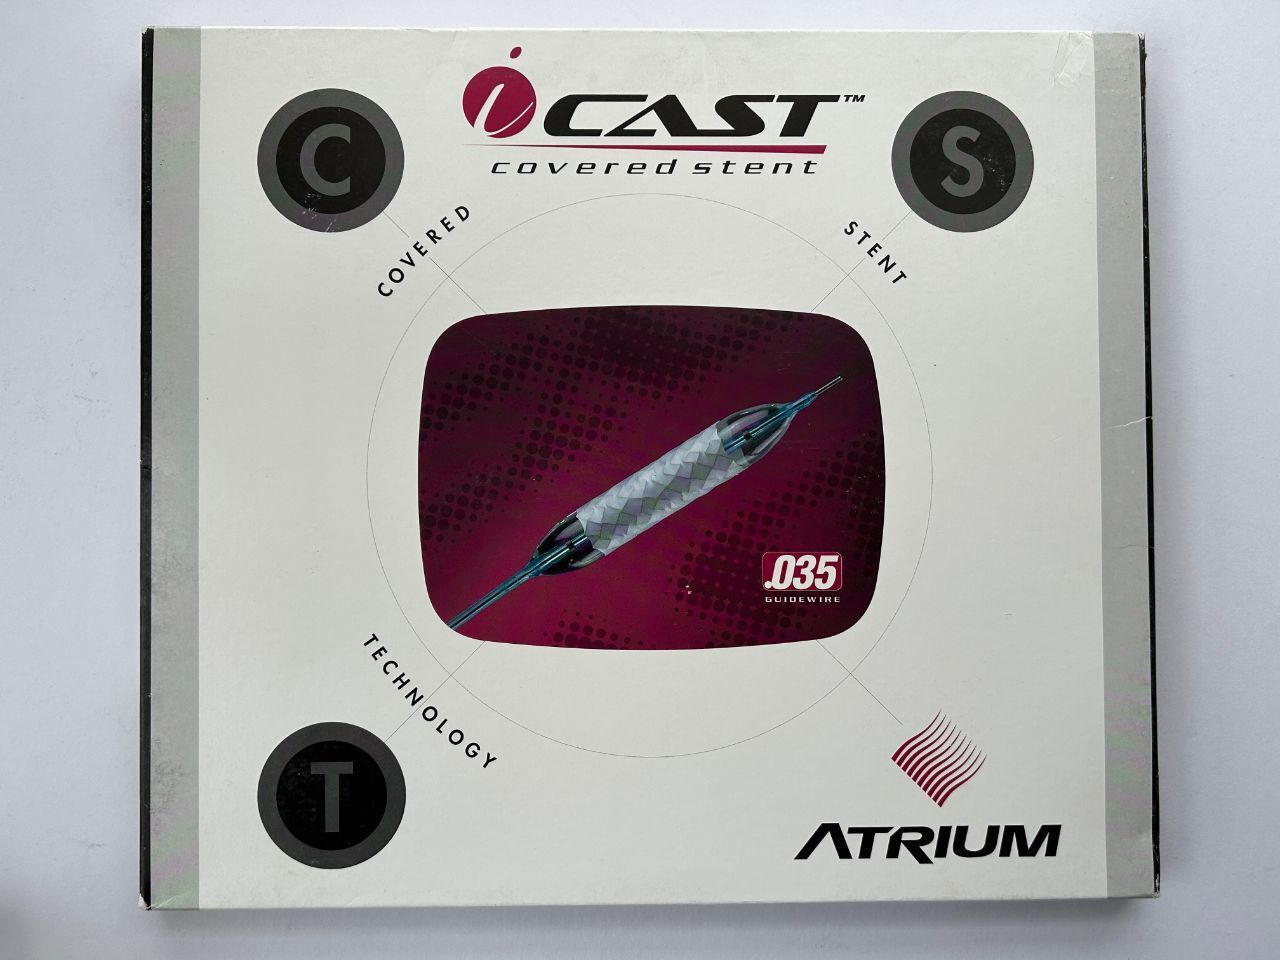 ATRIUM CAST covered stent 7mm x 38mm x 120cm REF: 85414 DATE: 2013/09